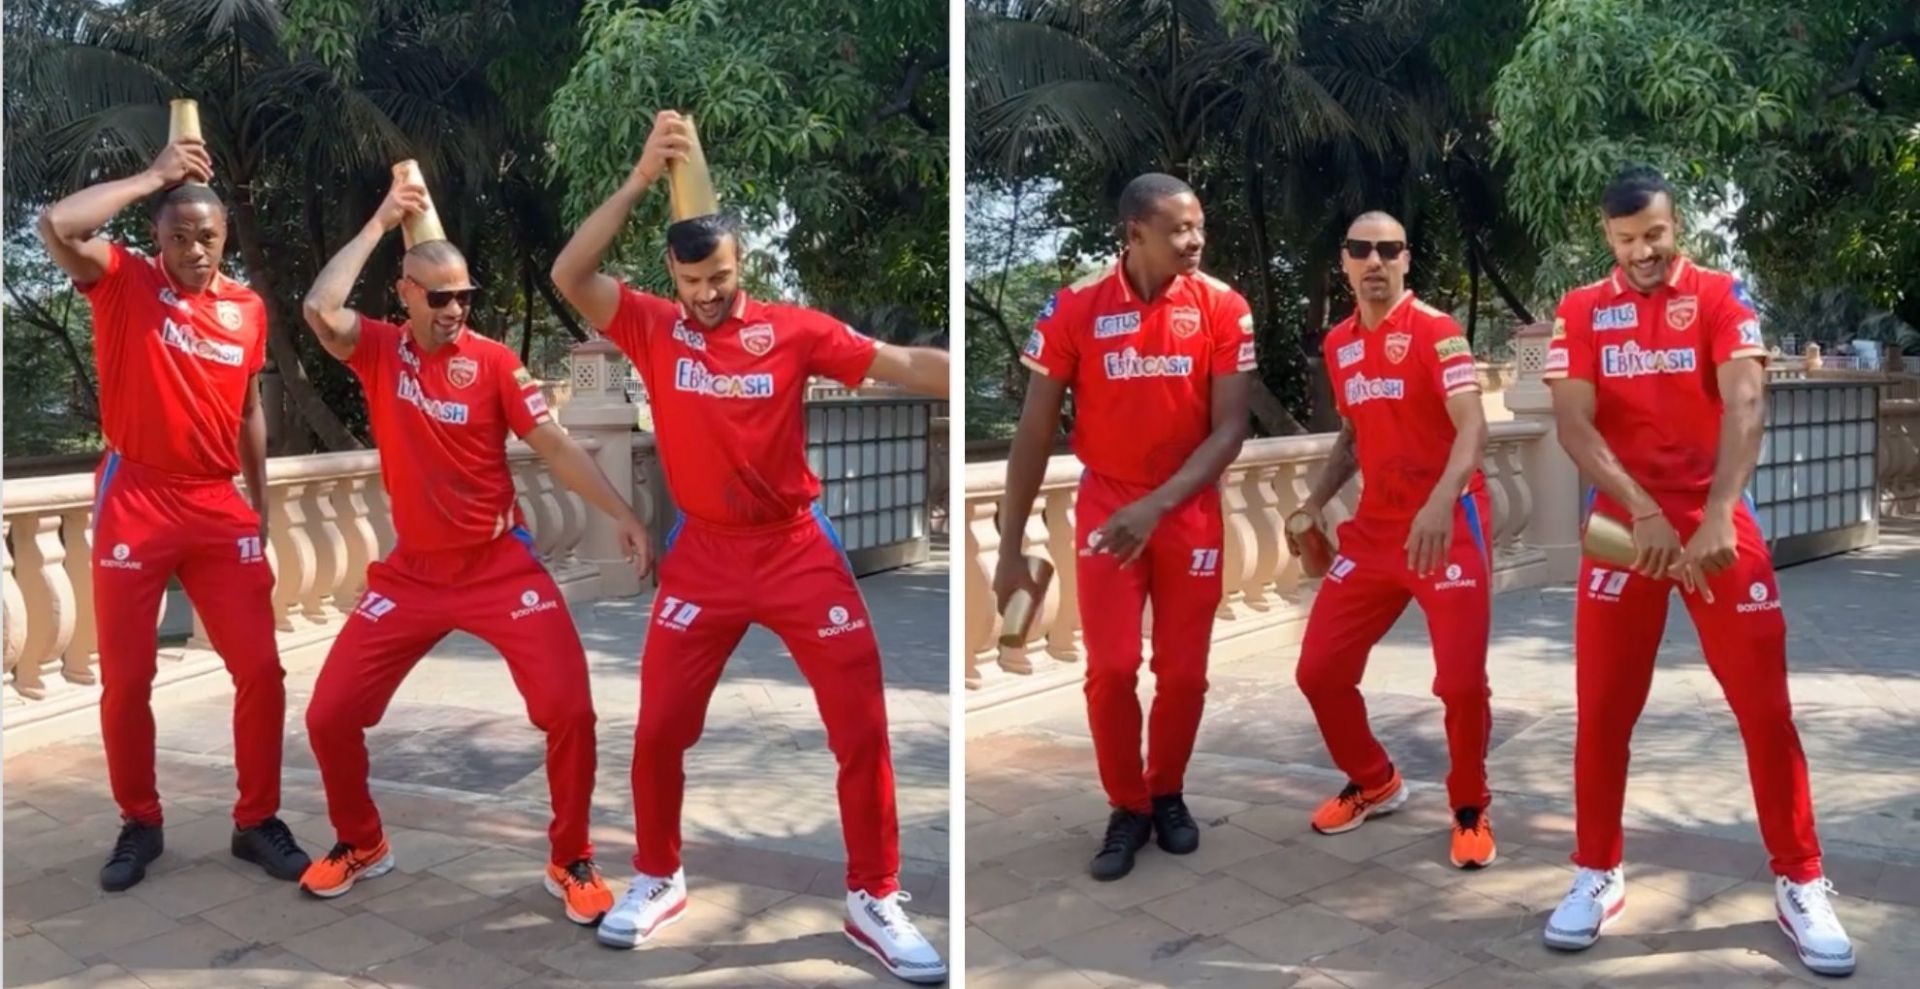 Punjab Kings cricketers dance to a viral song (Credit: Instagram/Shikhar Dhawan)